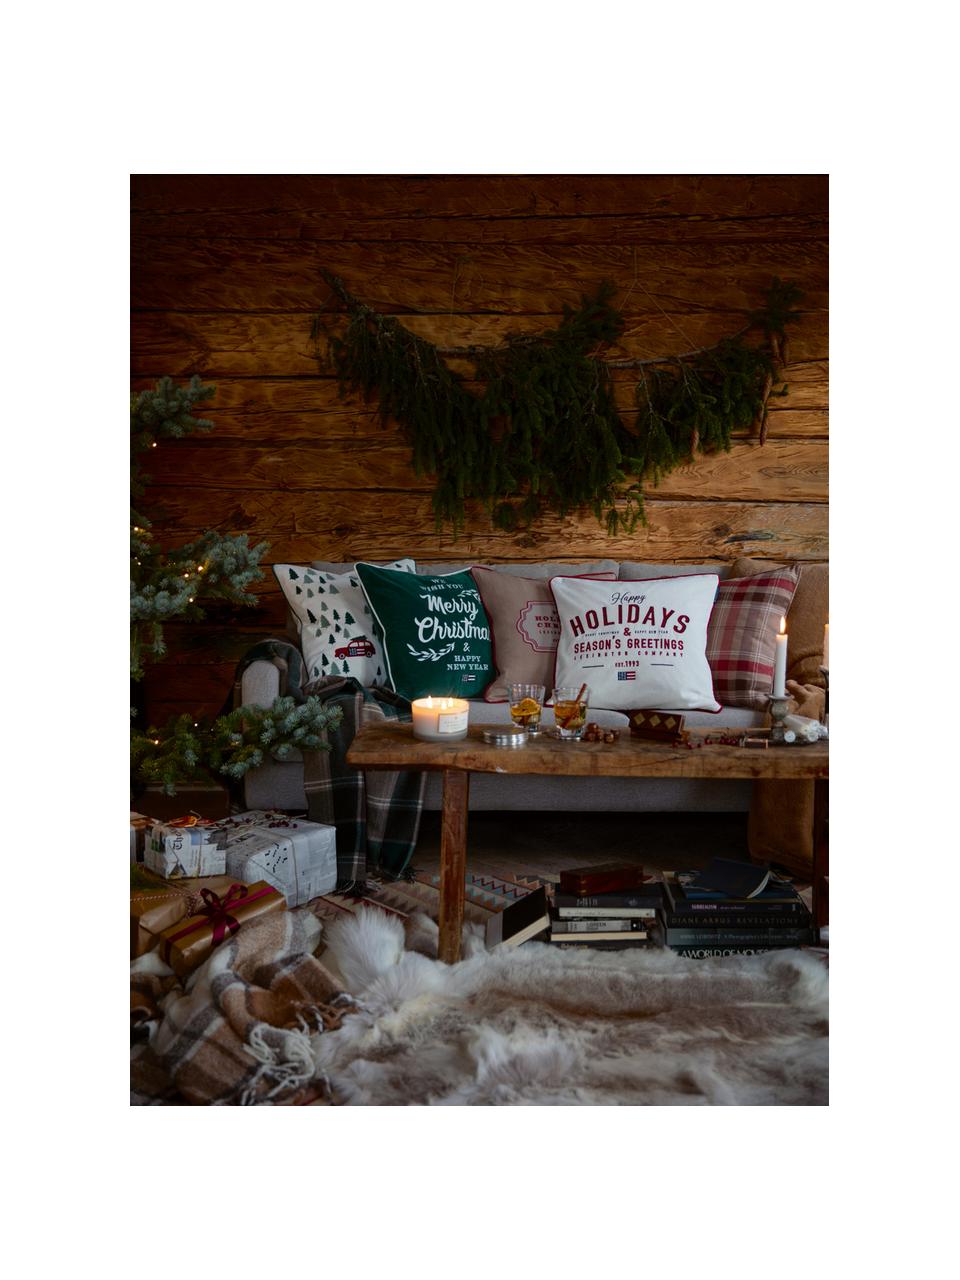 Federa arredo in velluto ricamata Happy Holidays, Cotone, Bianco, rosso, Larg. 50 x Lung. 50 cm